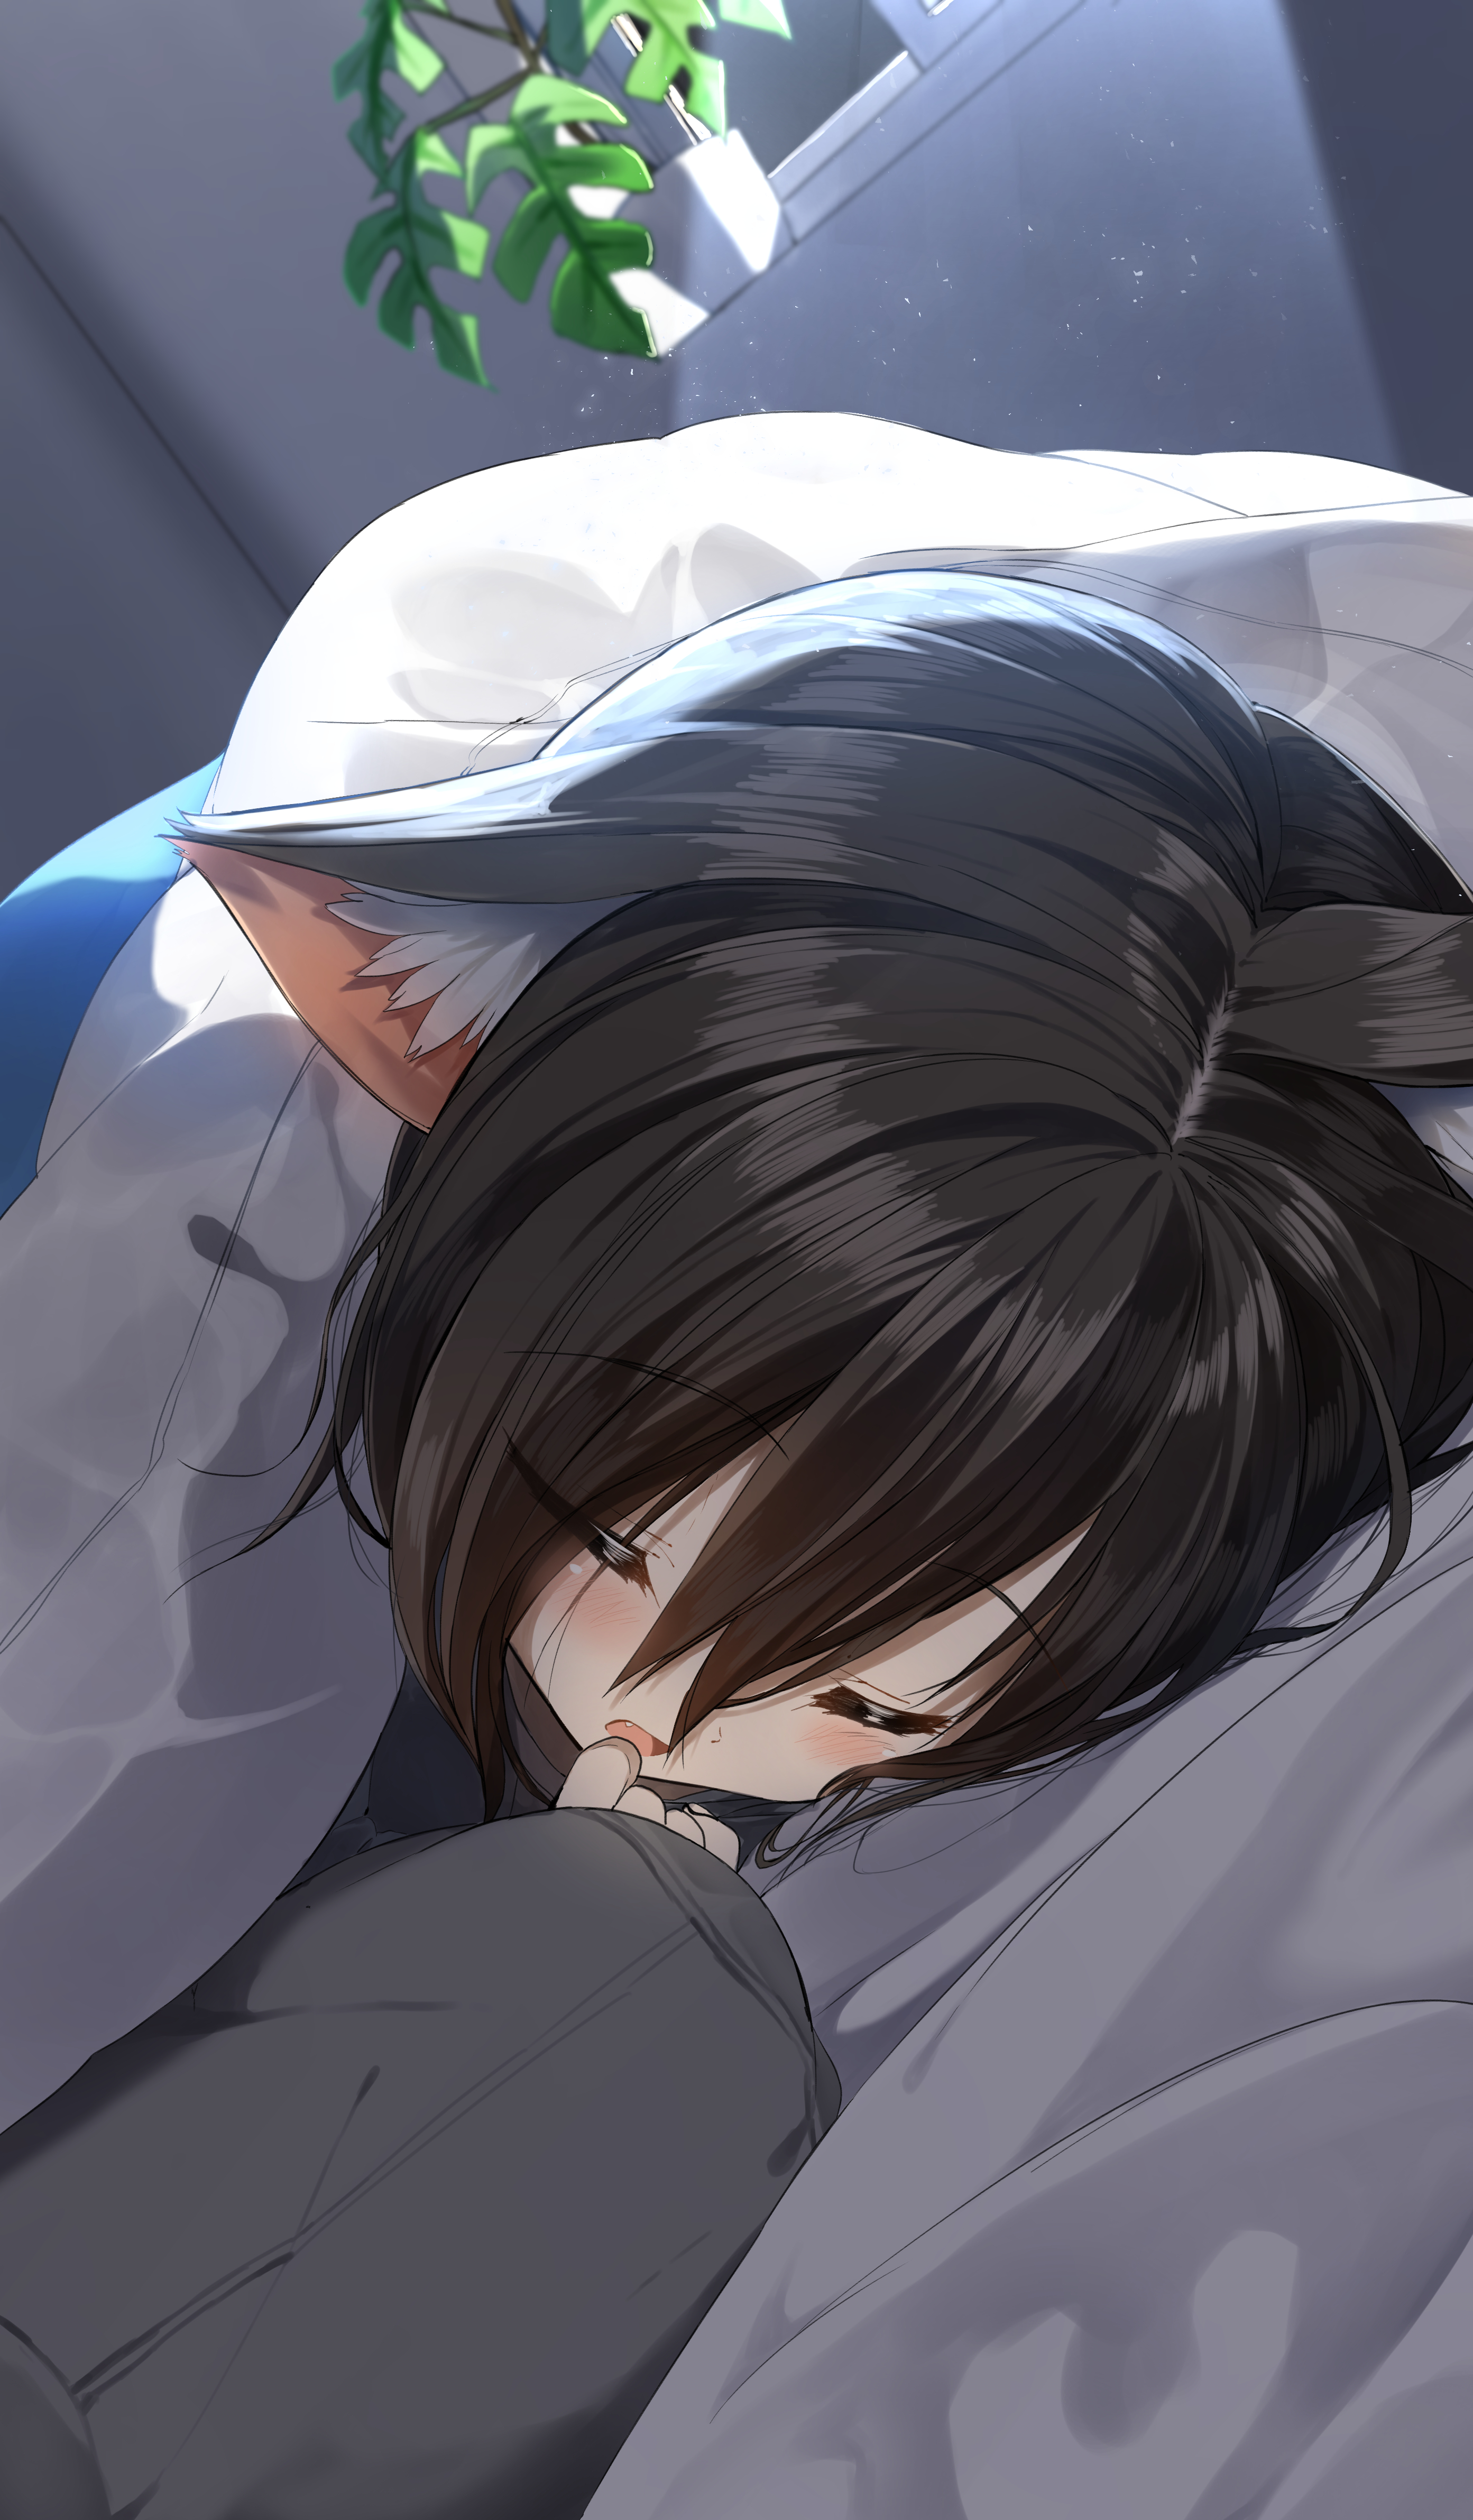 Anime 2786x4767 anime anime girls digital art artwork 2D portrait display sleeping RailgunKy animal ears cat girl dark hair in bed